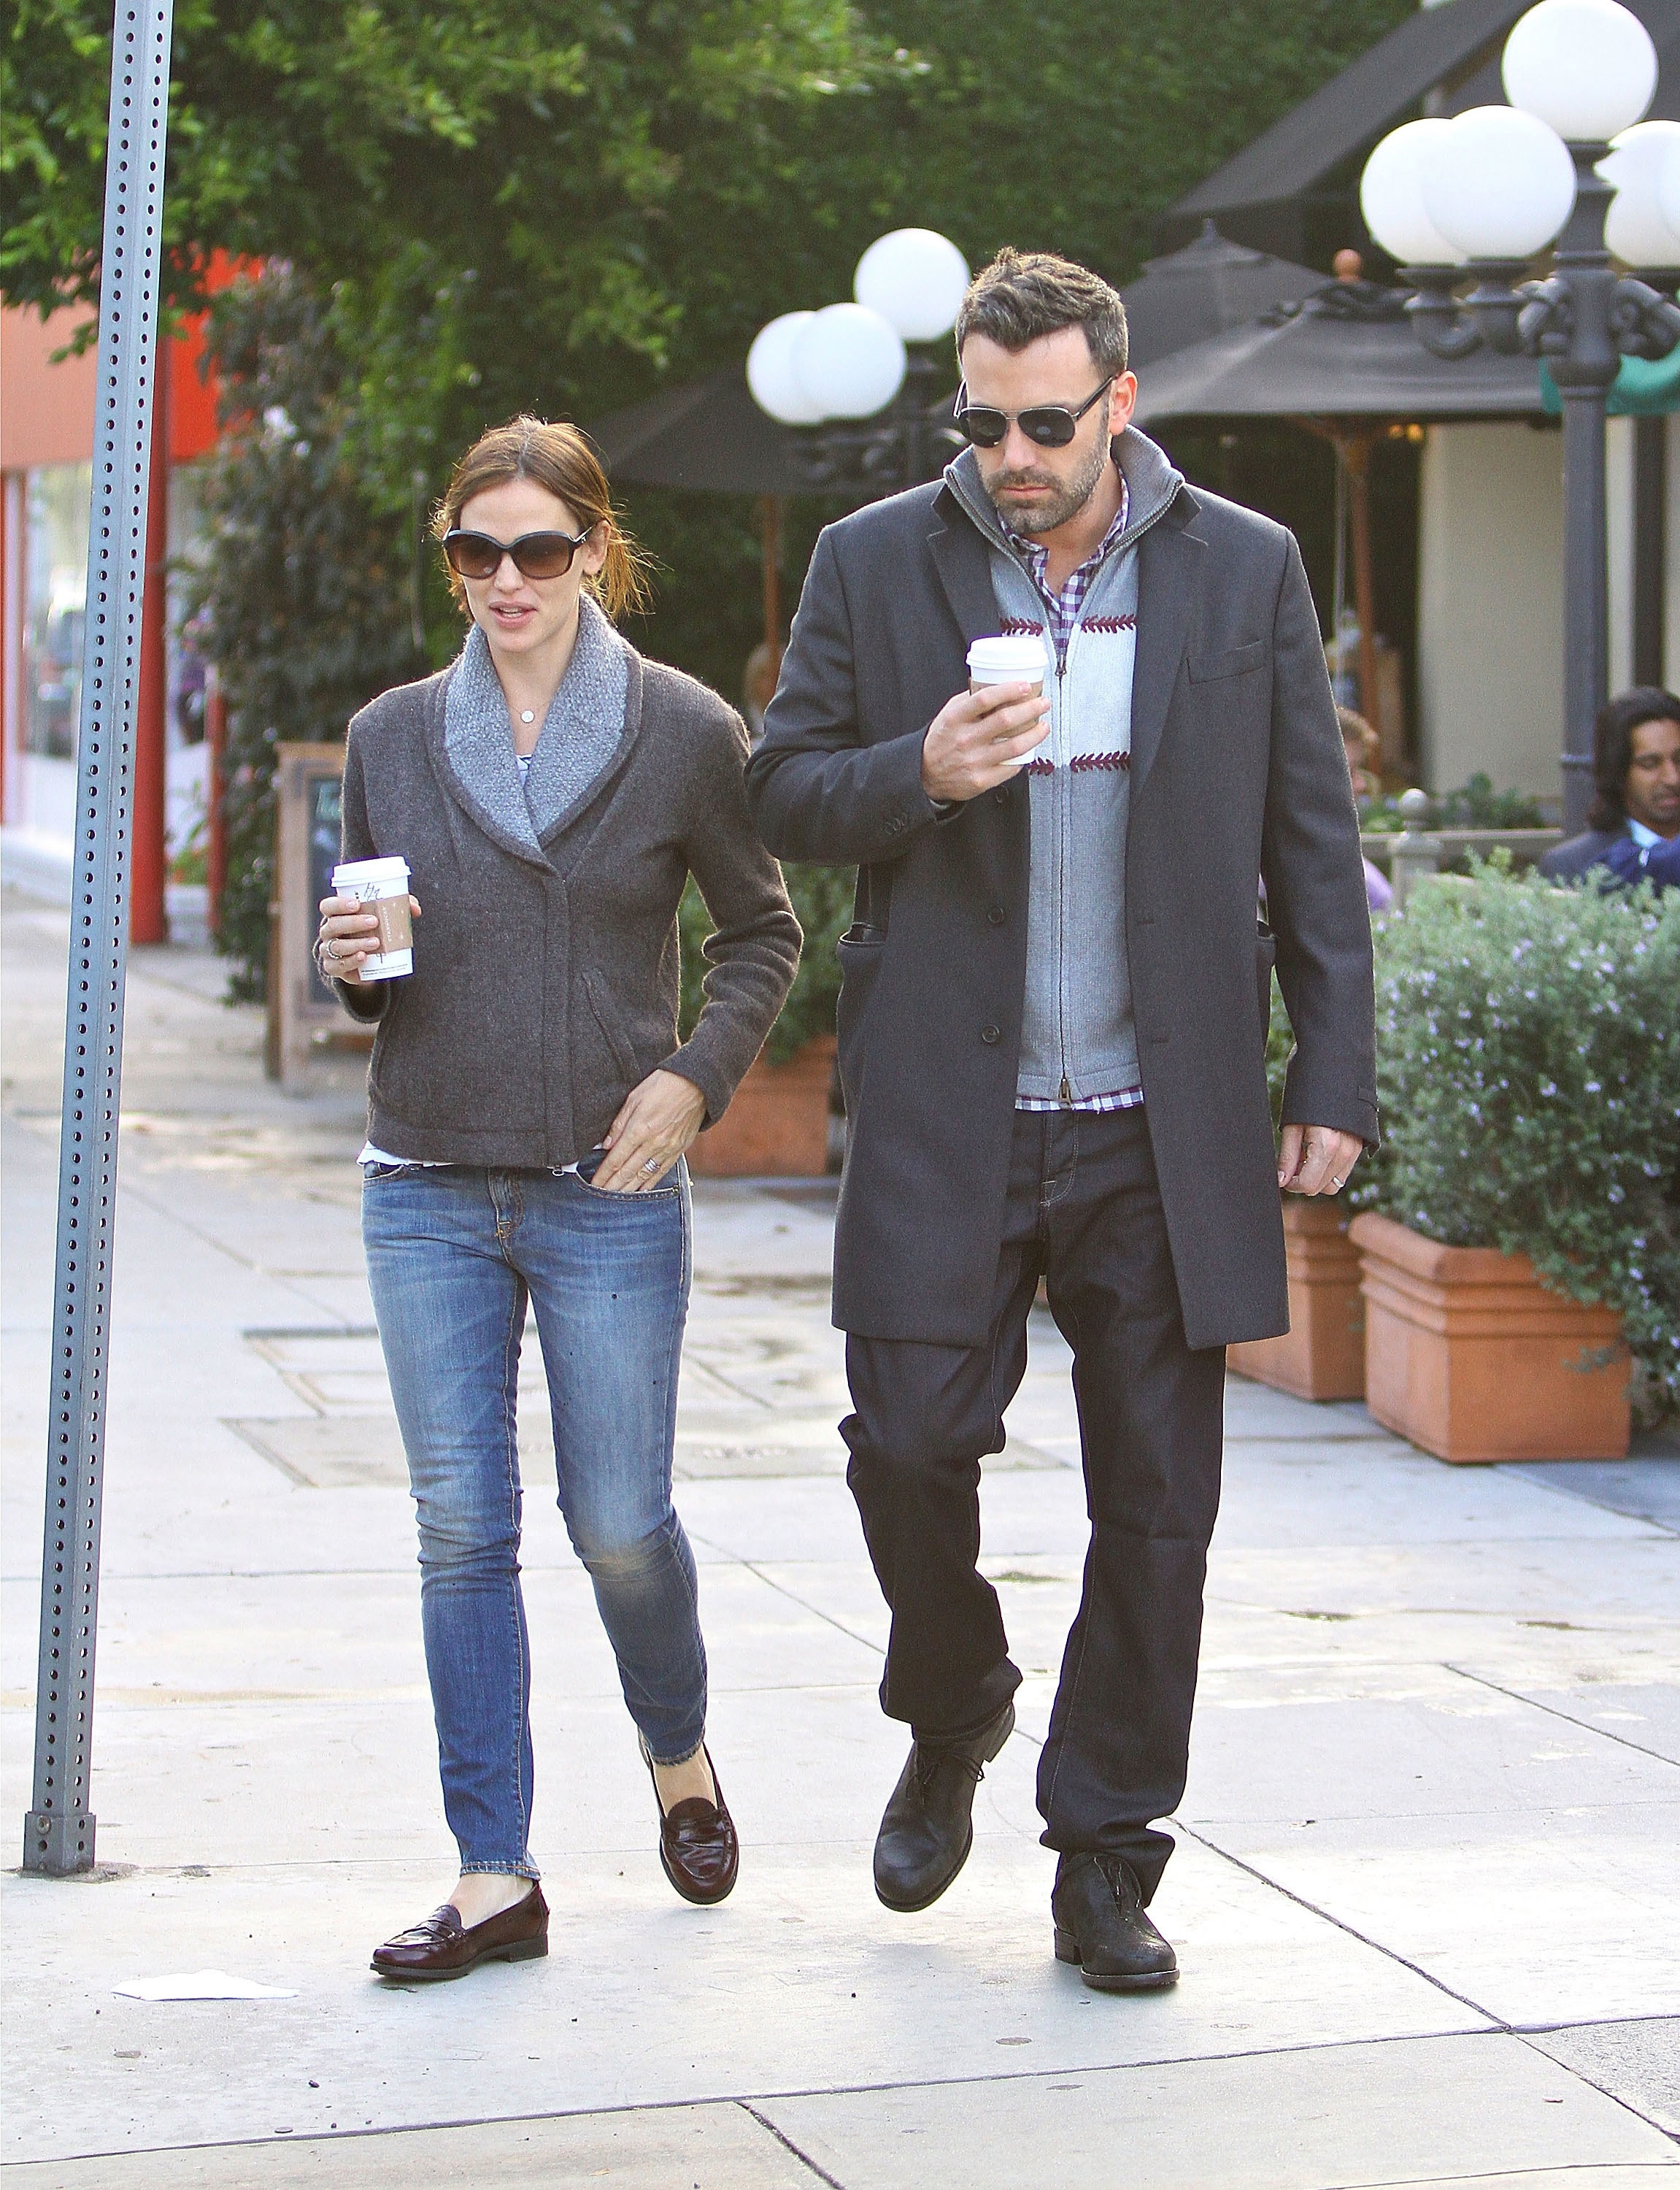 Jennifer Garner and Ben Affleck walking, talking, and drinking coffee